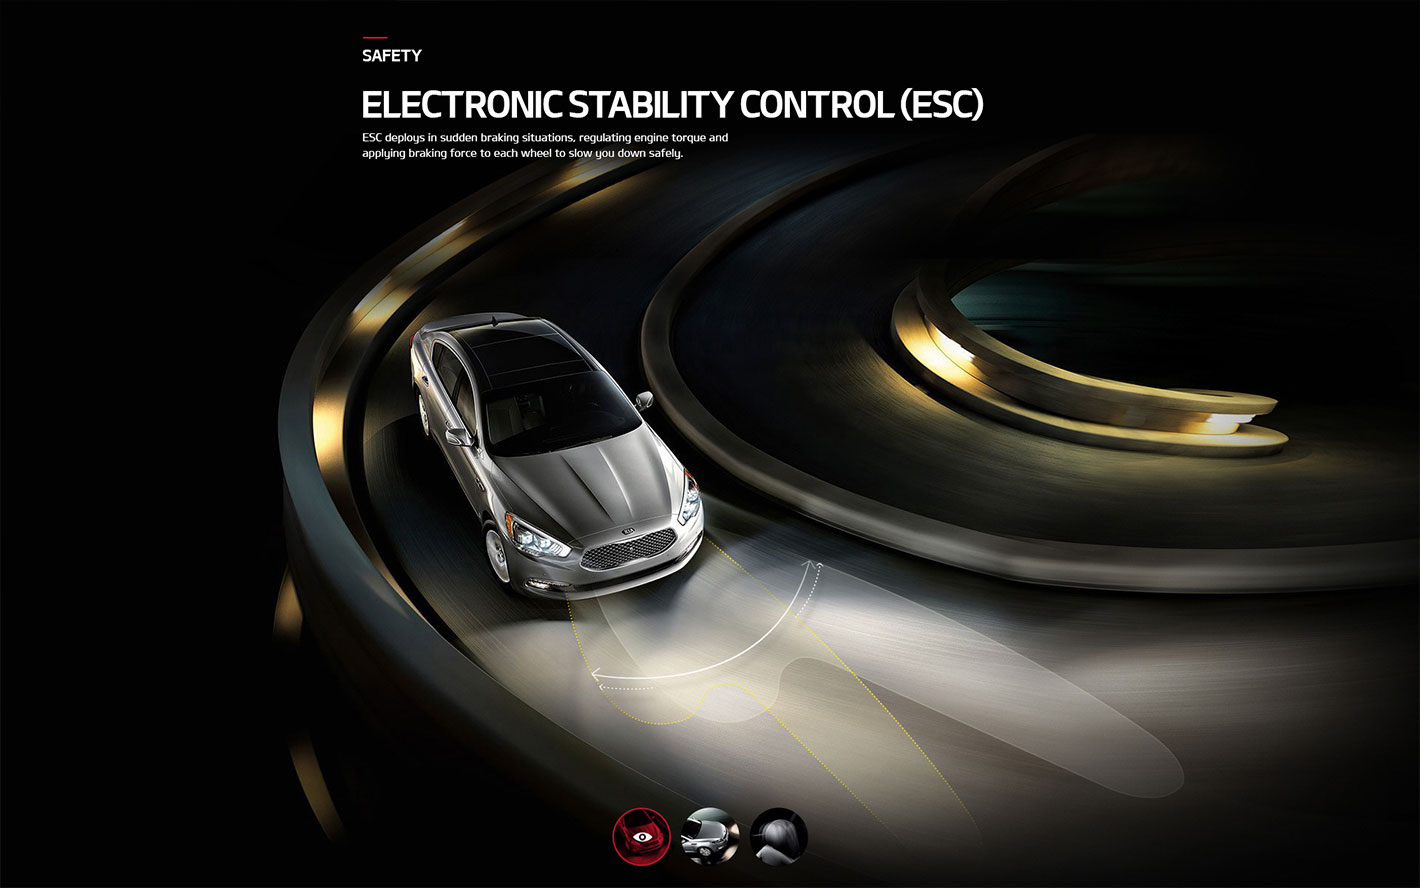 Web design illustrating Kia Motors' Electronic Stability Control (ESC) safety feature